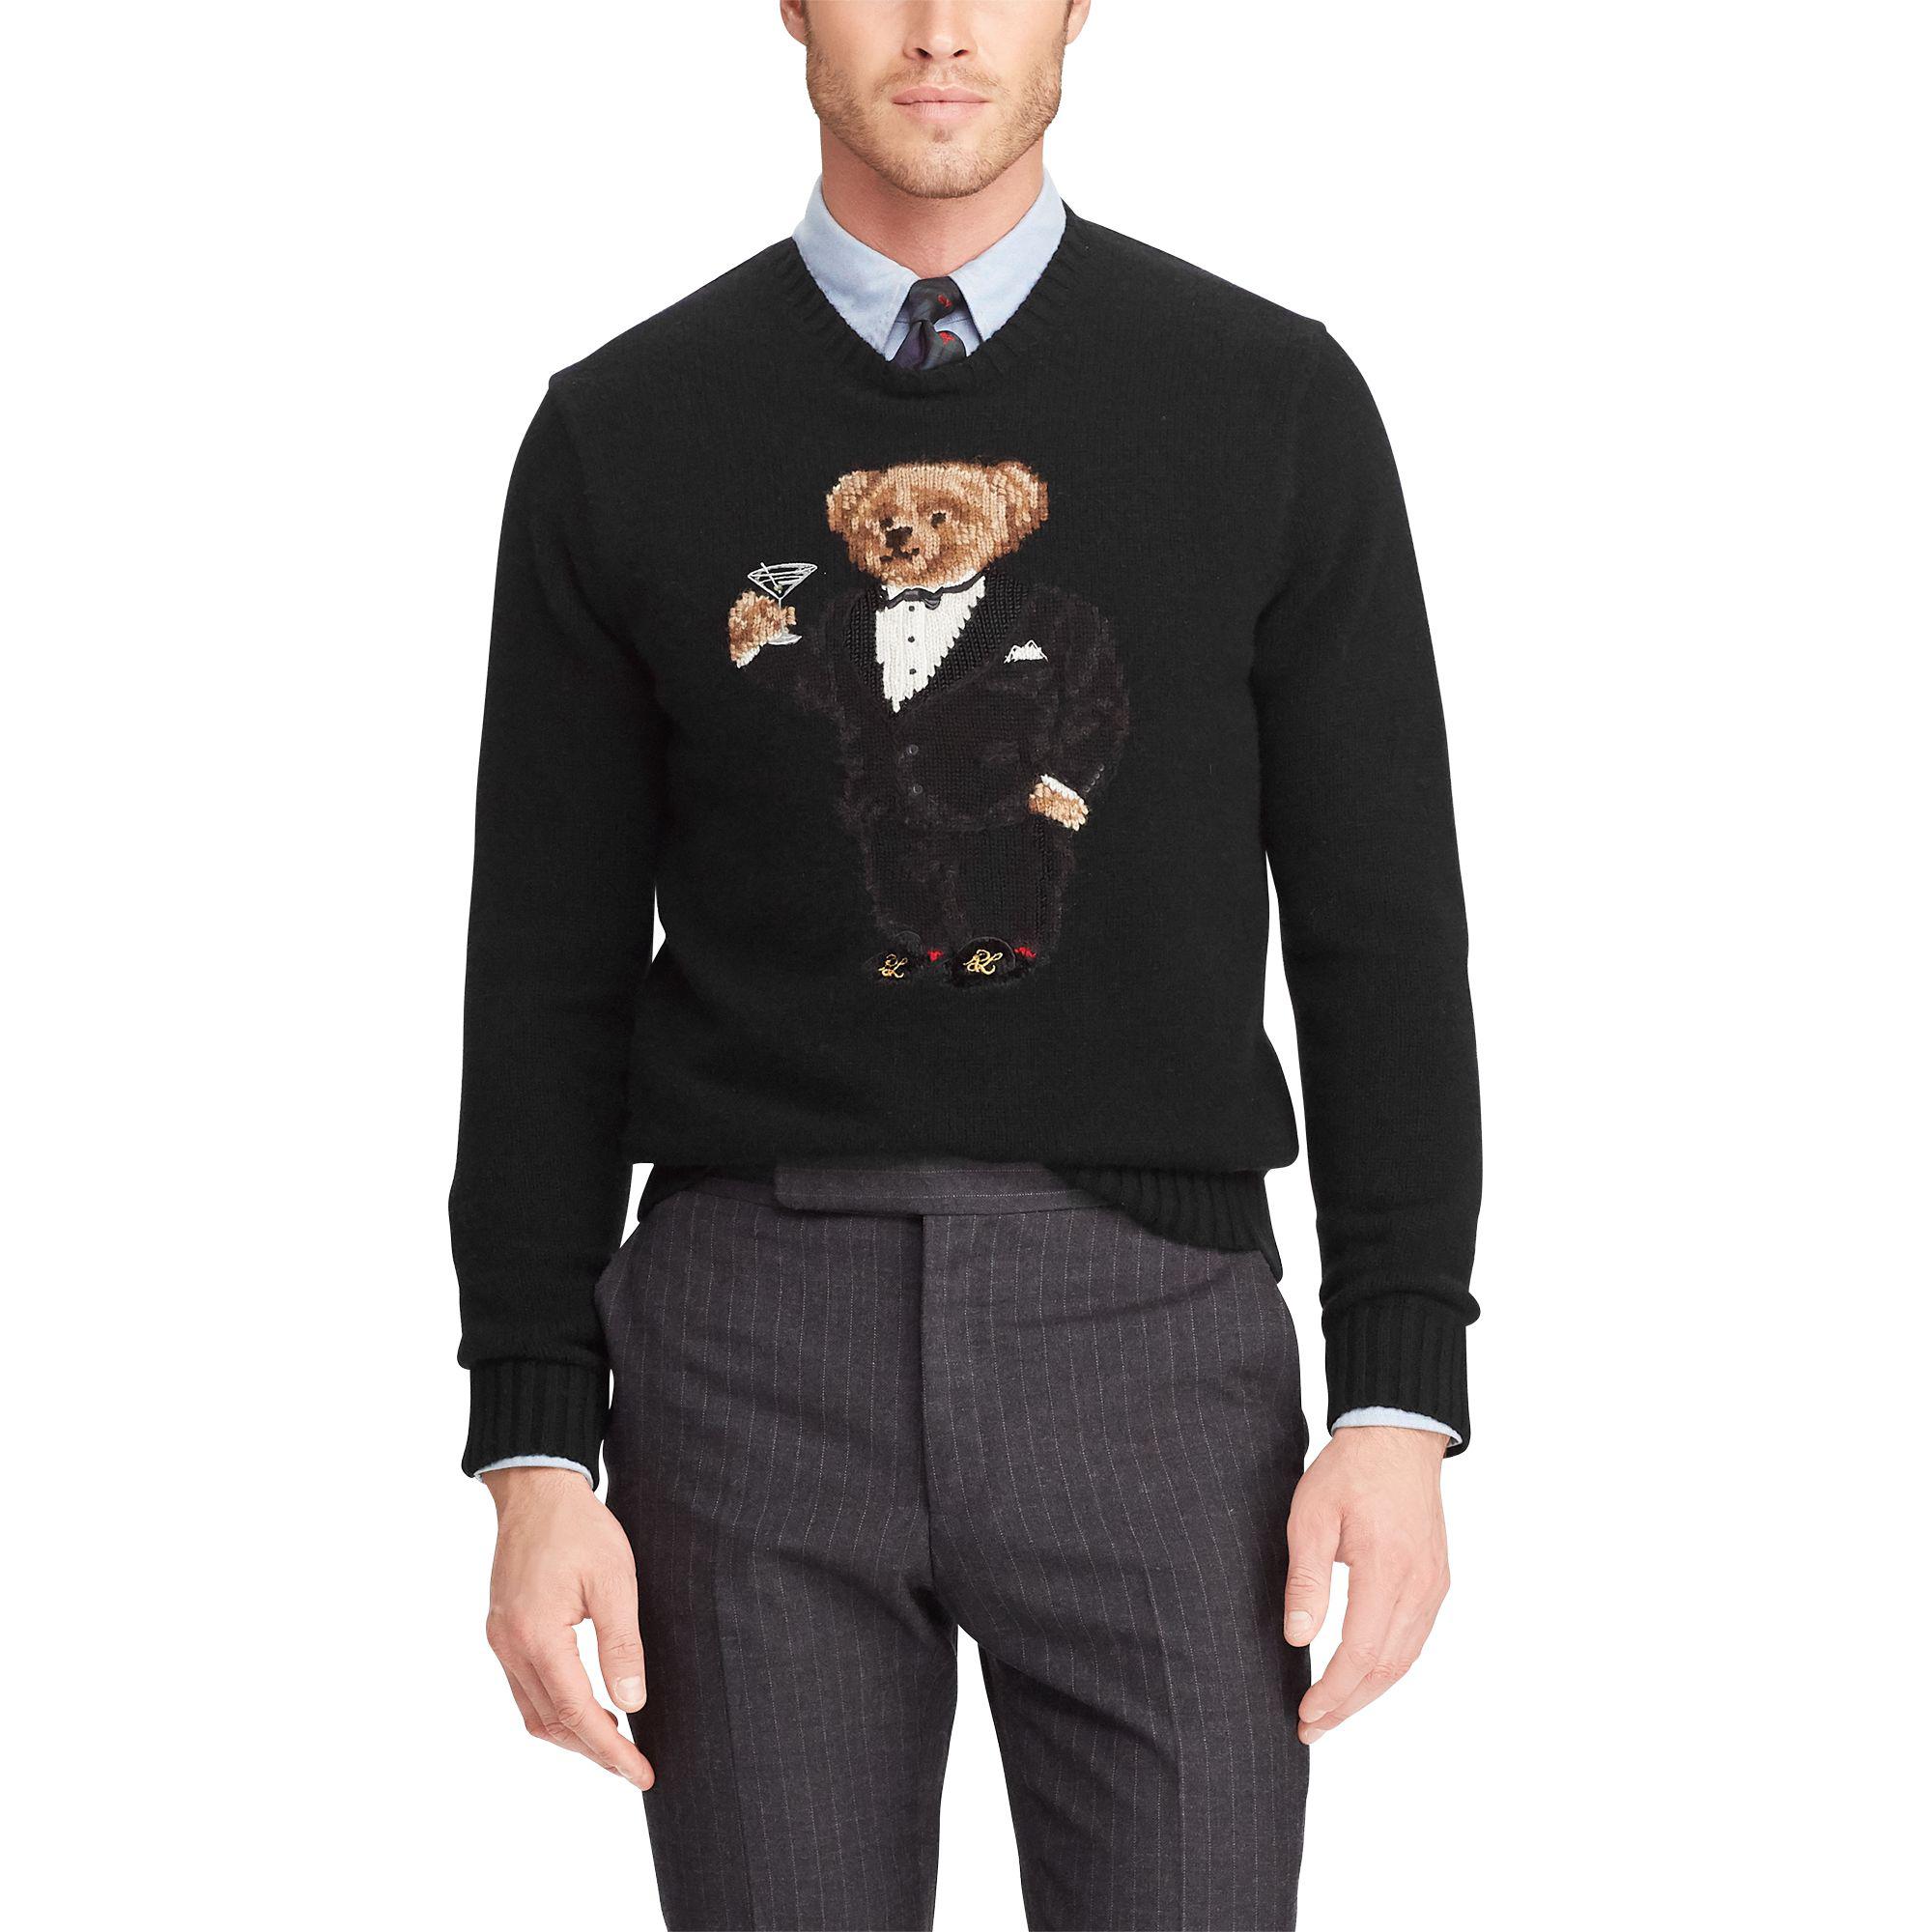 Polo Ralph Lauren Martini Bear Wool Jumper in Black for Men - Lyst